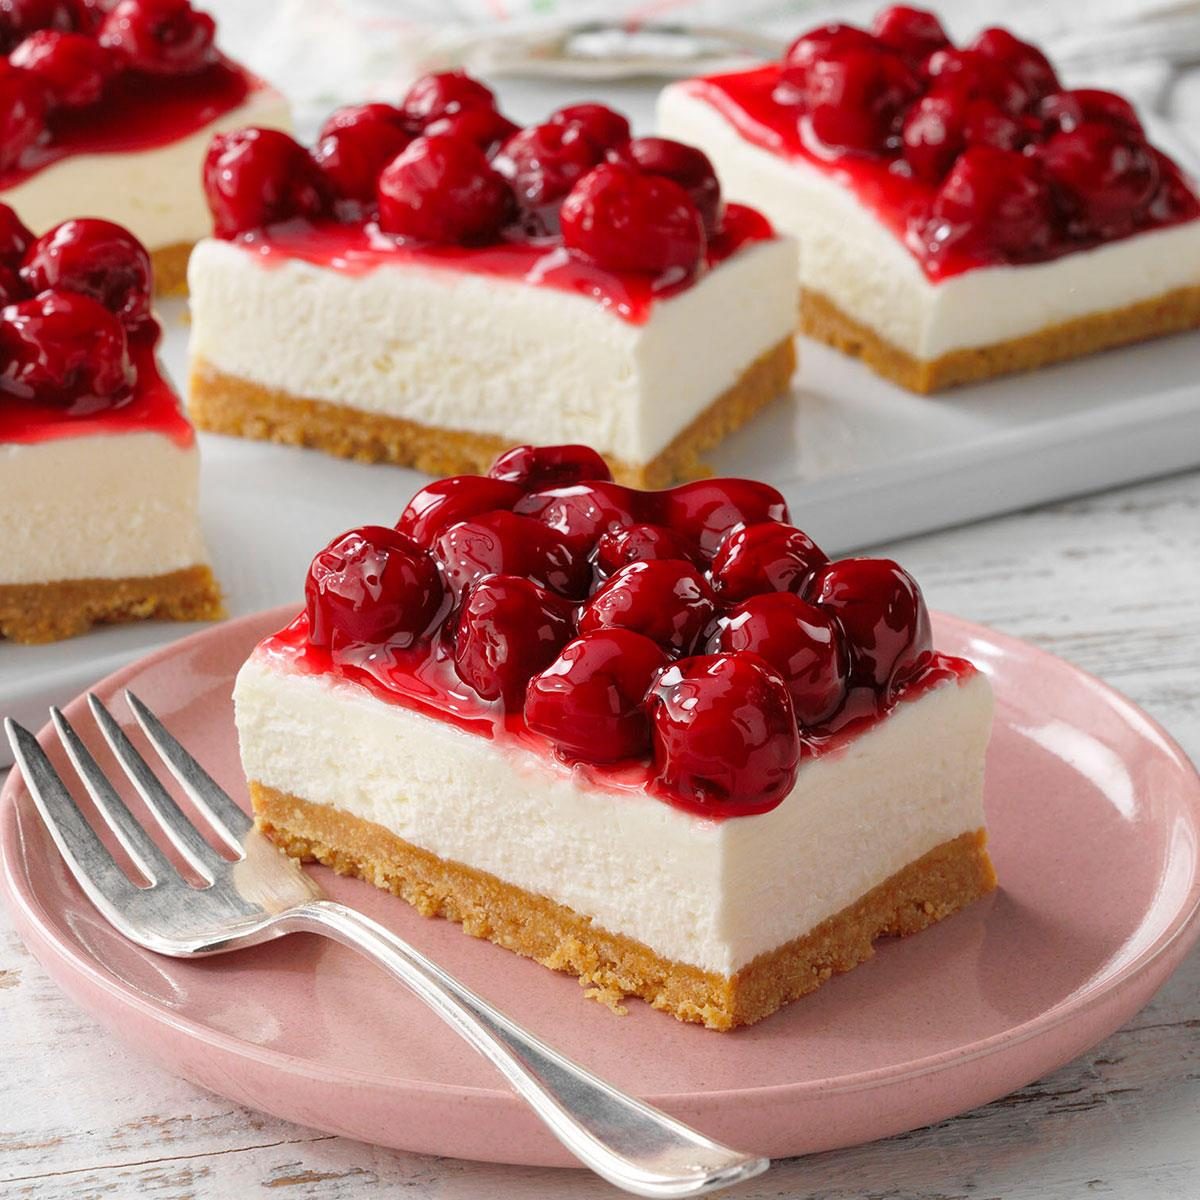 Cherry Delight Dessert Recipe: How to Make It